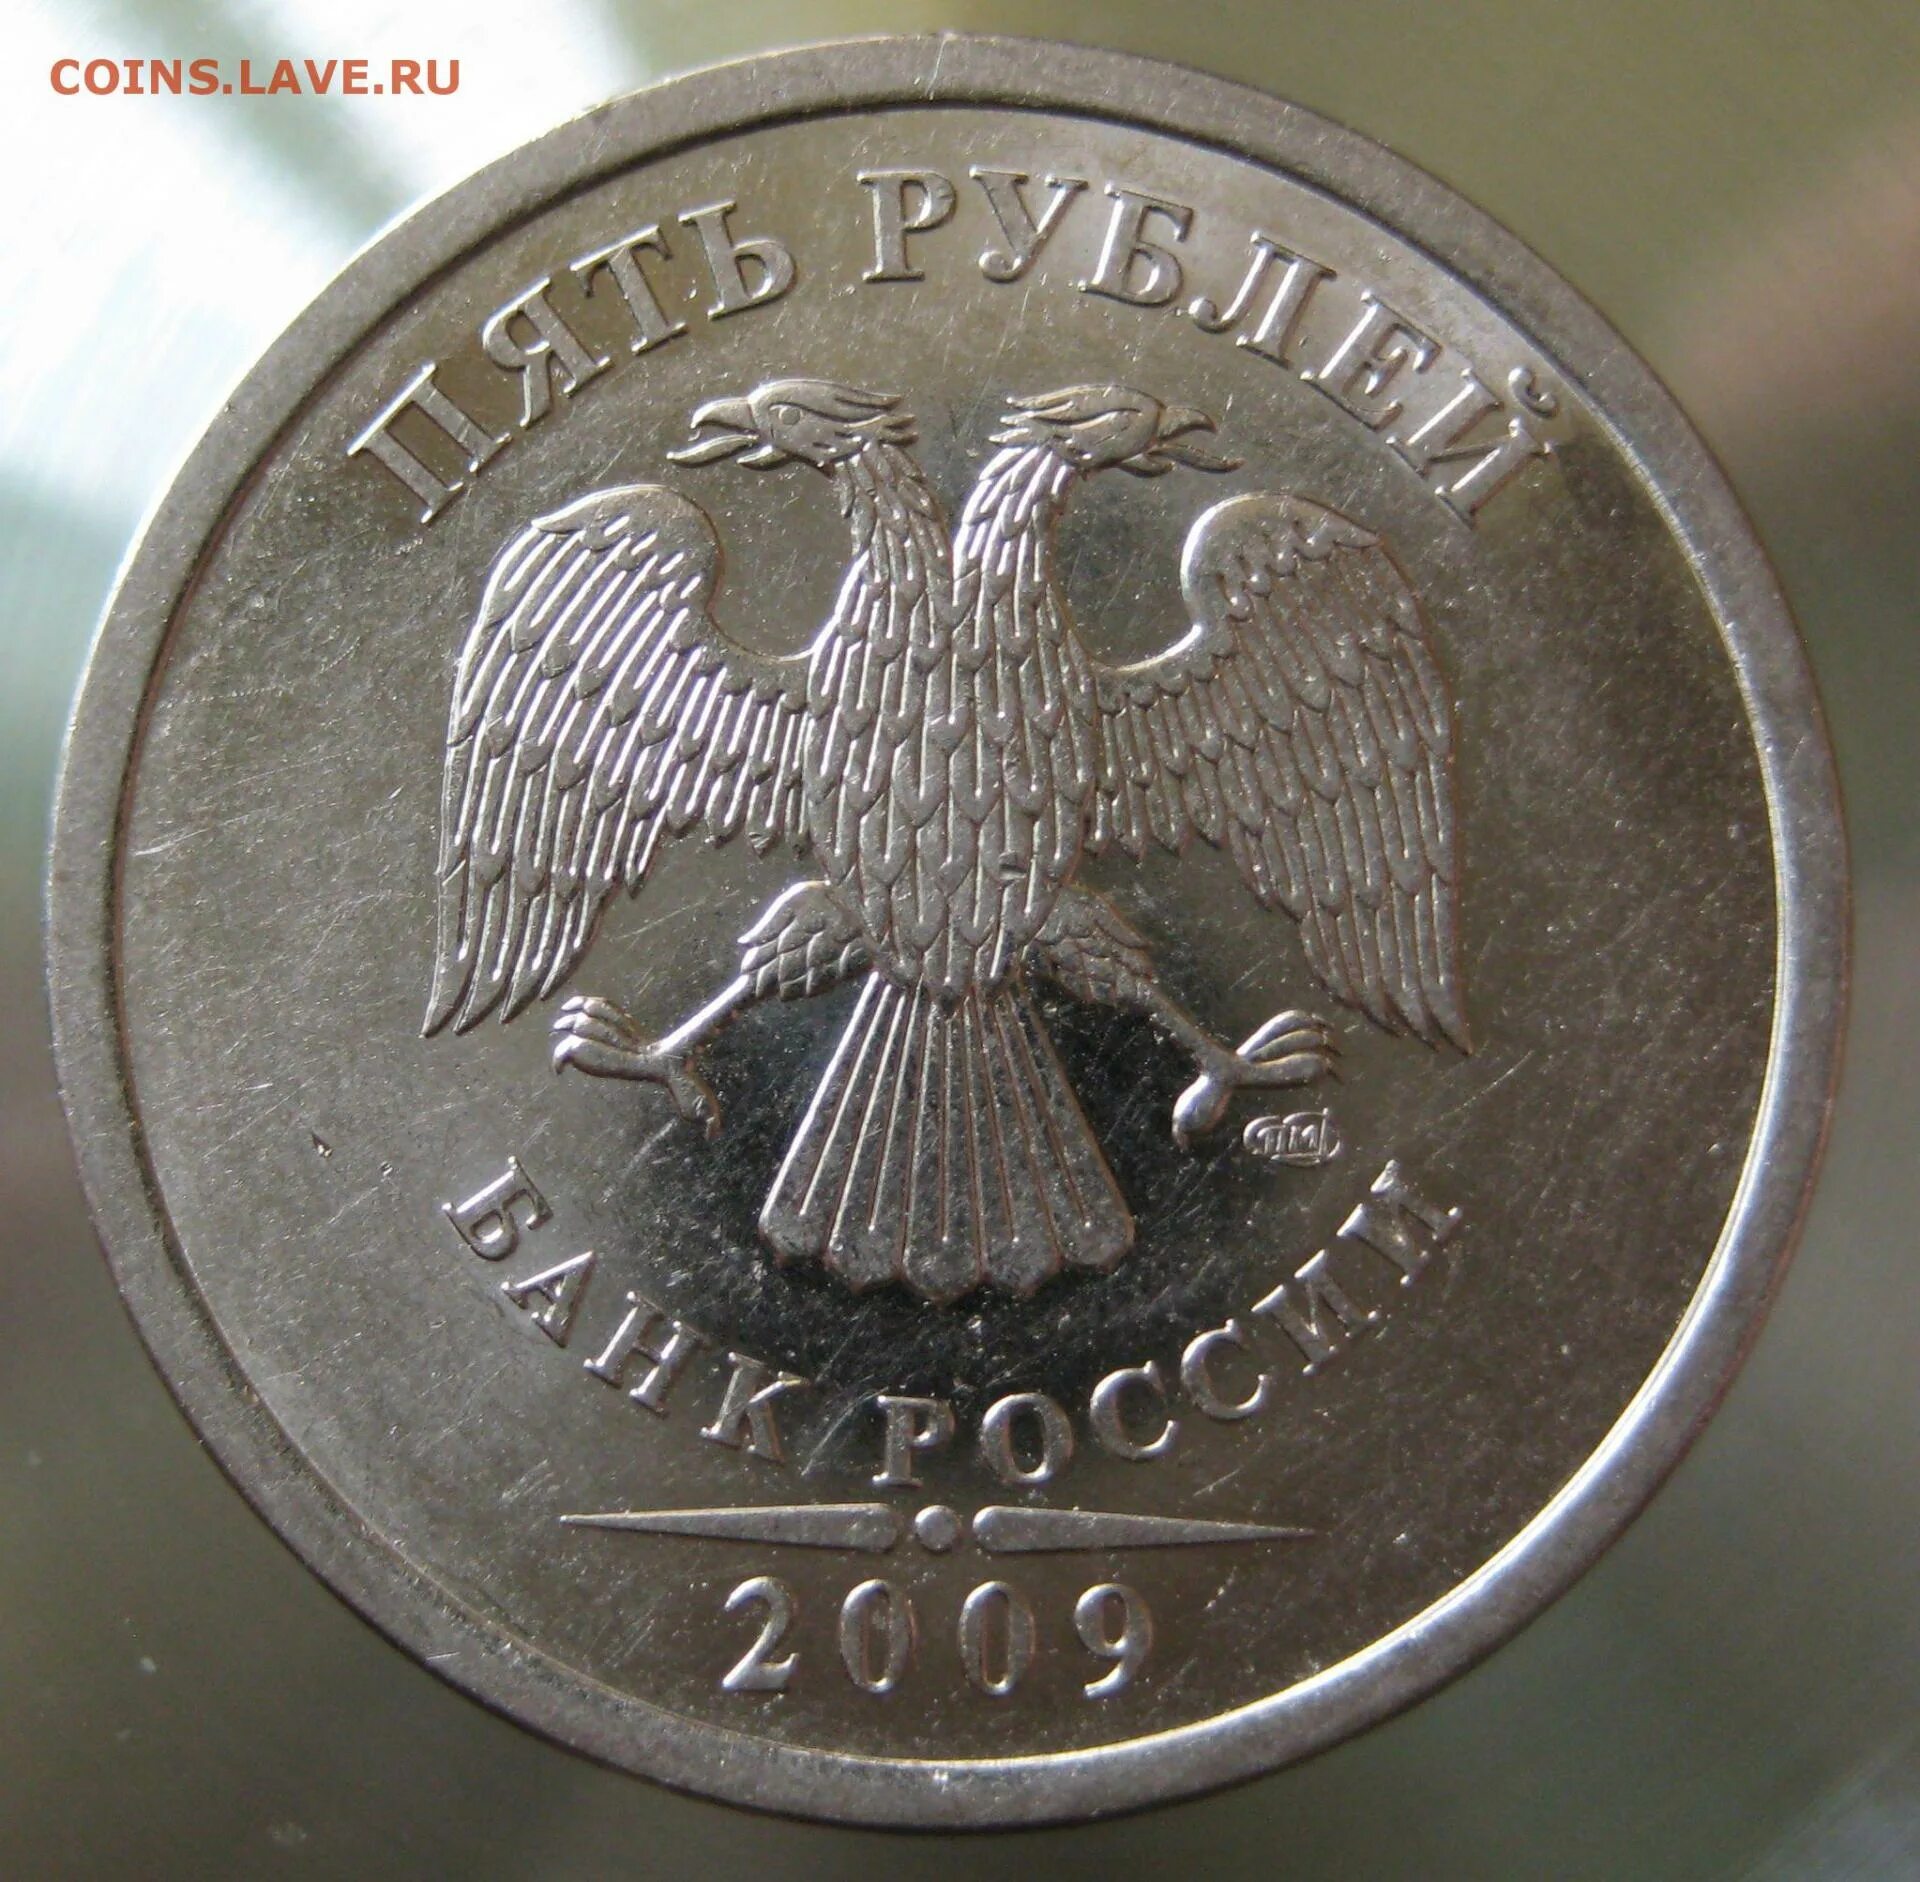 5 рублей 2009 спмд. 5 Рублей 2009 СПМД немагнитная. 5 Рублей 2009 СПМД магнитная штемпель г. 5 Рублей штемпель г 2009.